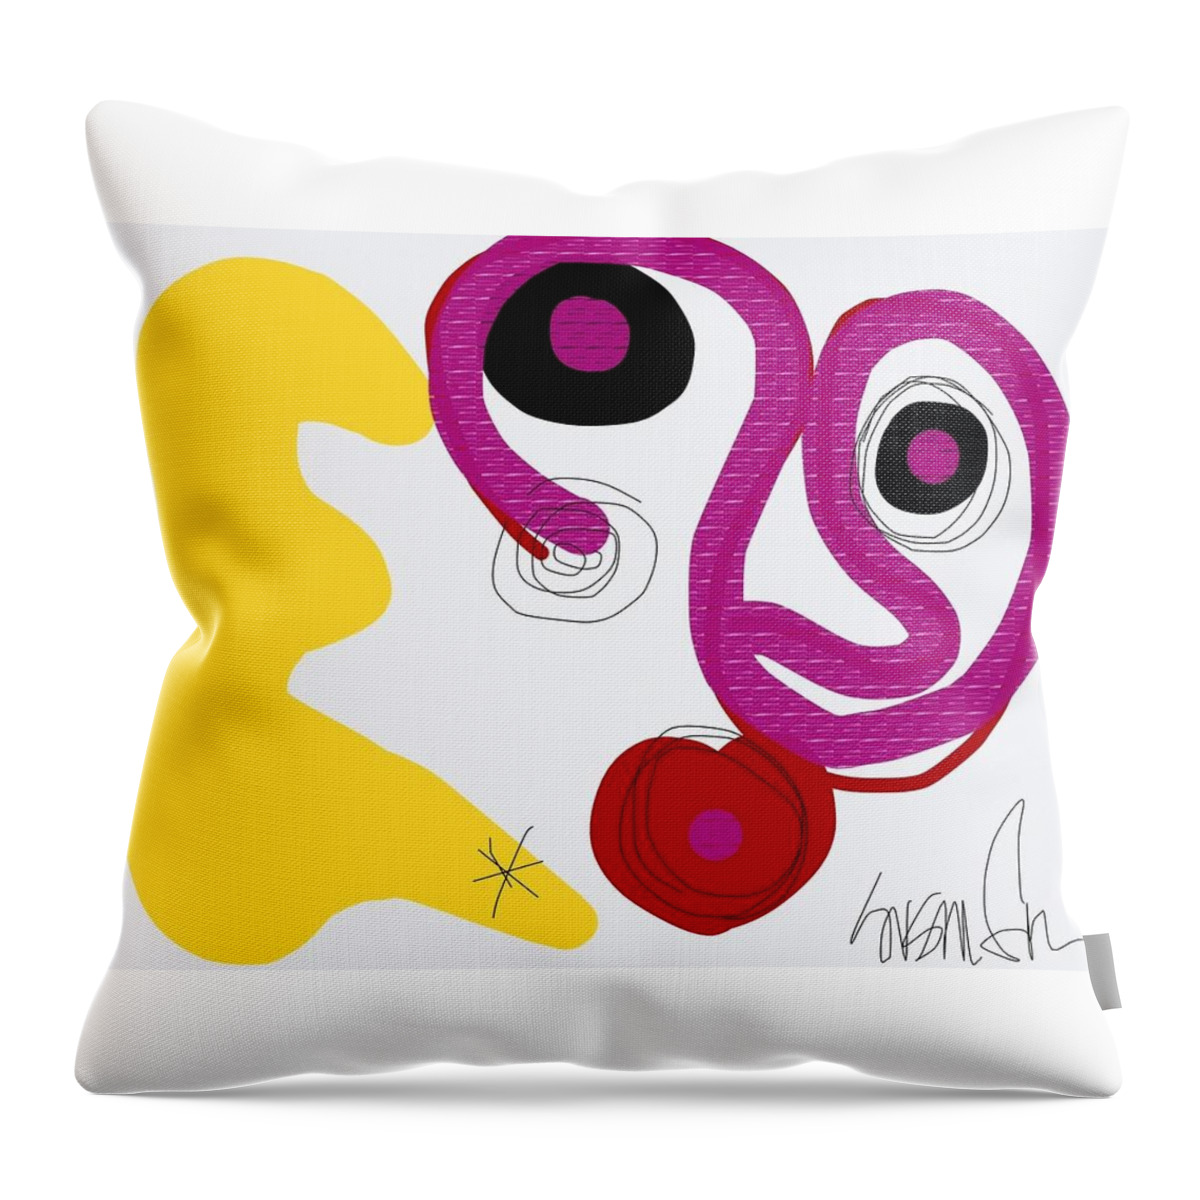  Throw Pillow featuring the digital art Miro Miro on the Wall by Susan Fielder